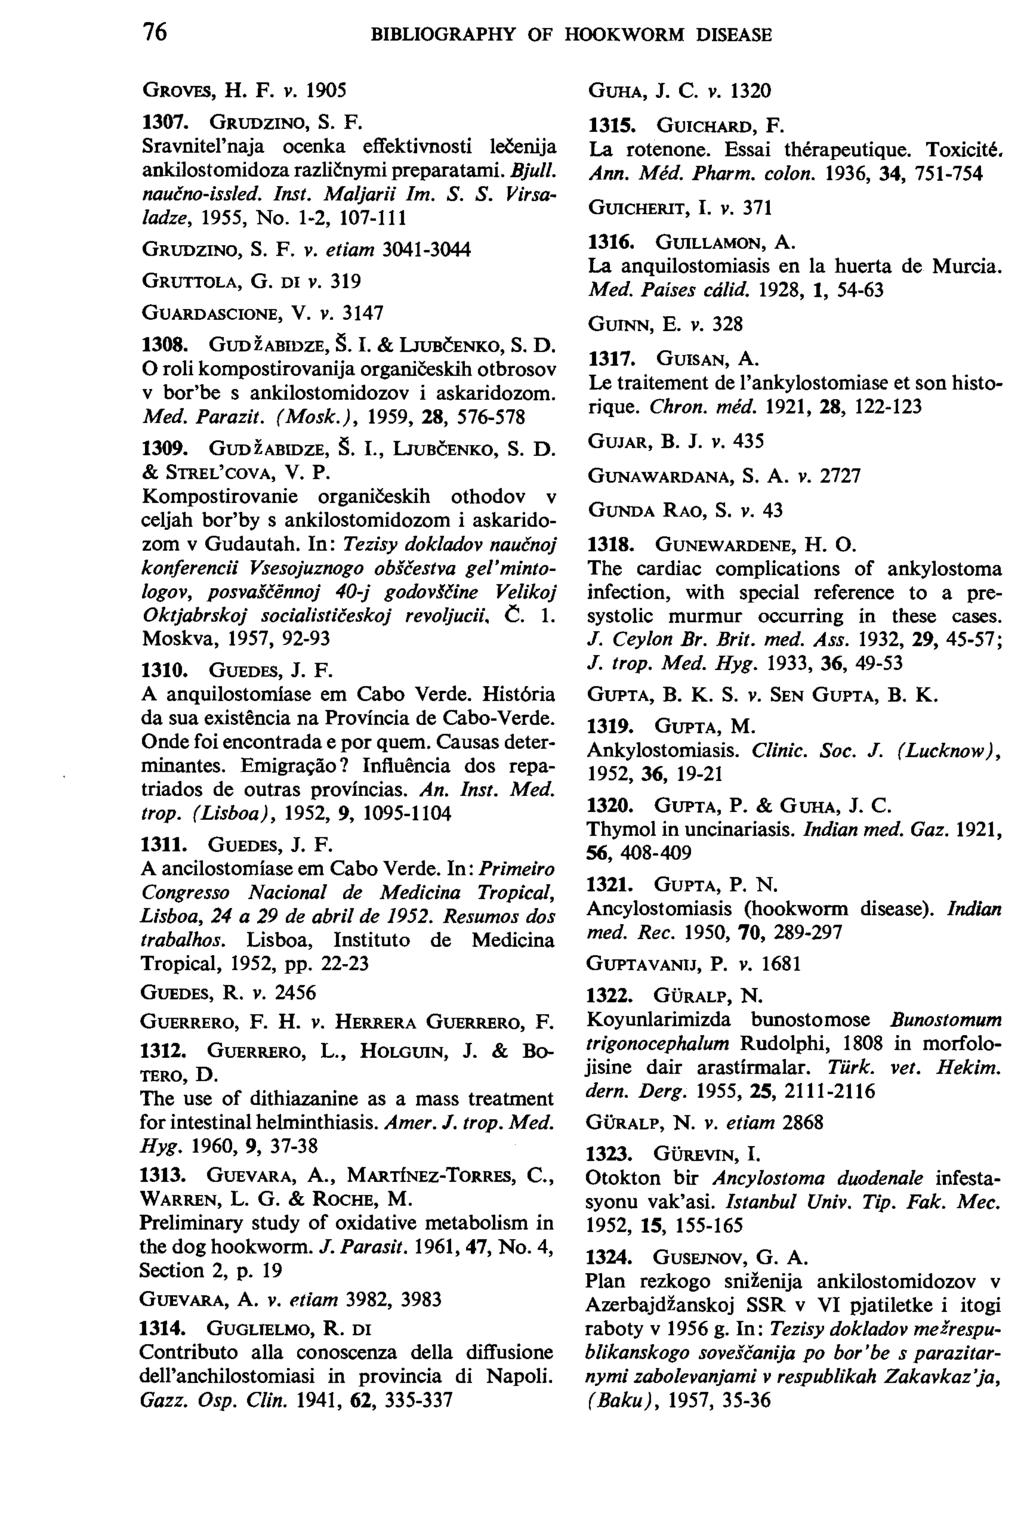 76 BIBLIOGRAPHY OF HOOKWORM DISEASE GROVFS, H. F. V. 1905 GUHA, J. c. V. 1320 1307. GRUDZINO, S. F. Sravnitel'naja ocenka effektivnosti leeenija ankilostomidoza razli~nymi preparatami. Bjull.